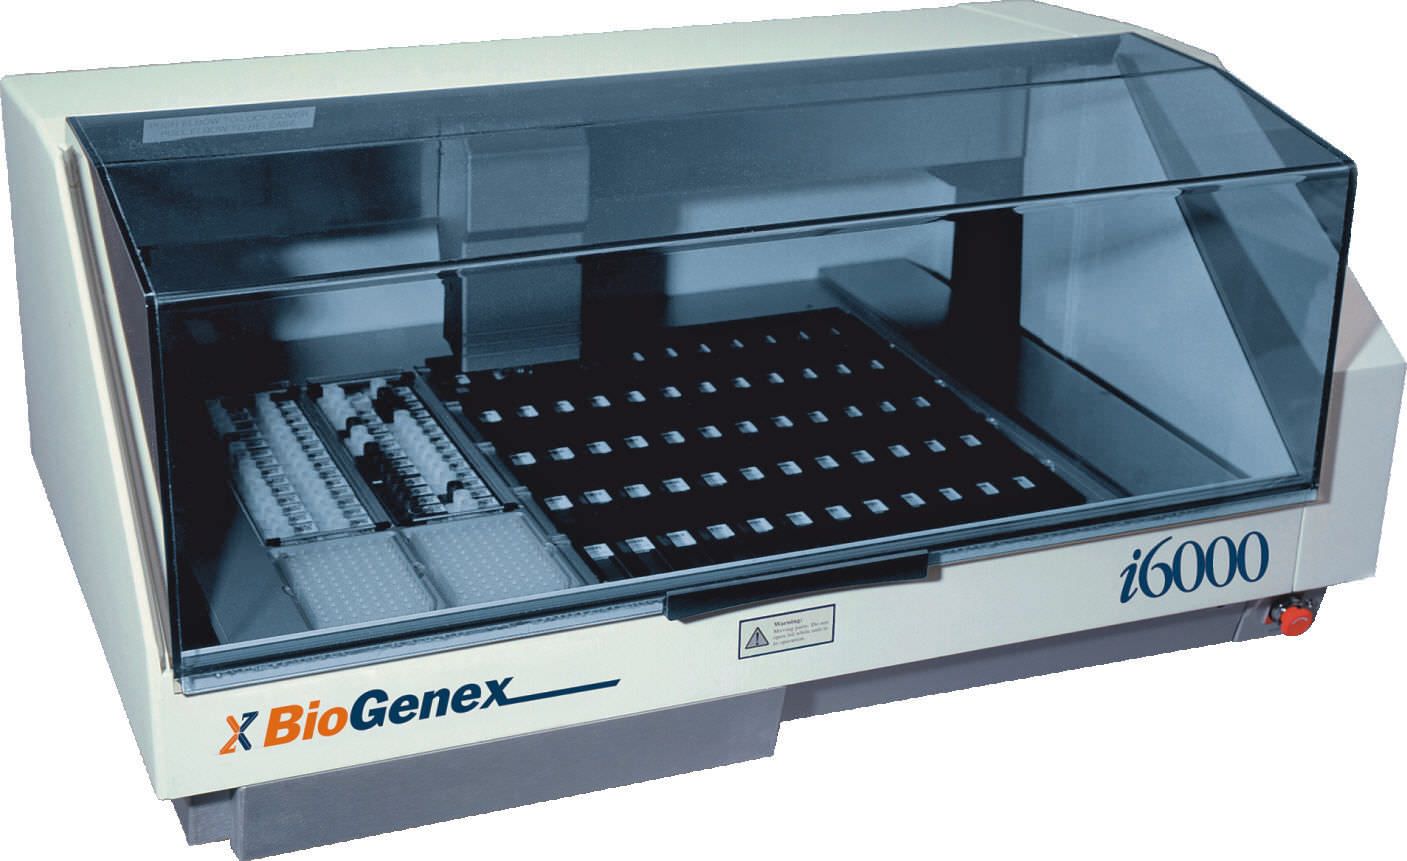 Staining automatic sample preparation system / for histology i6000 Diagnostics BioGenex Laboratories